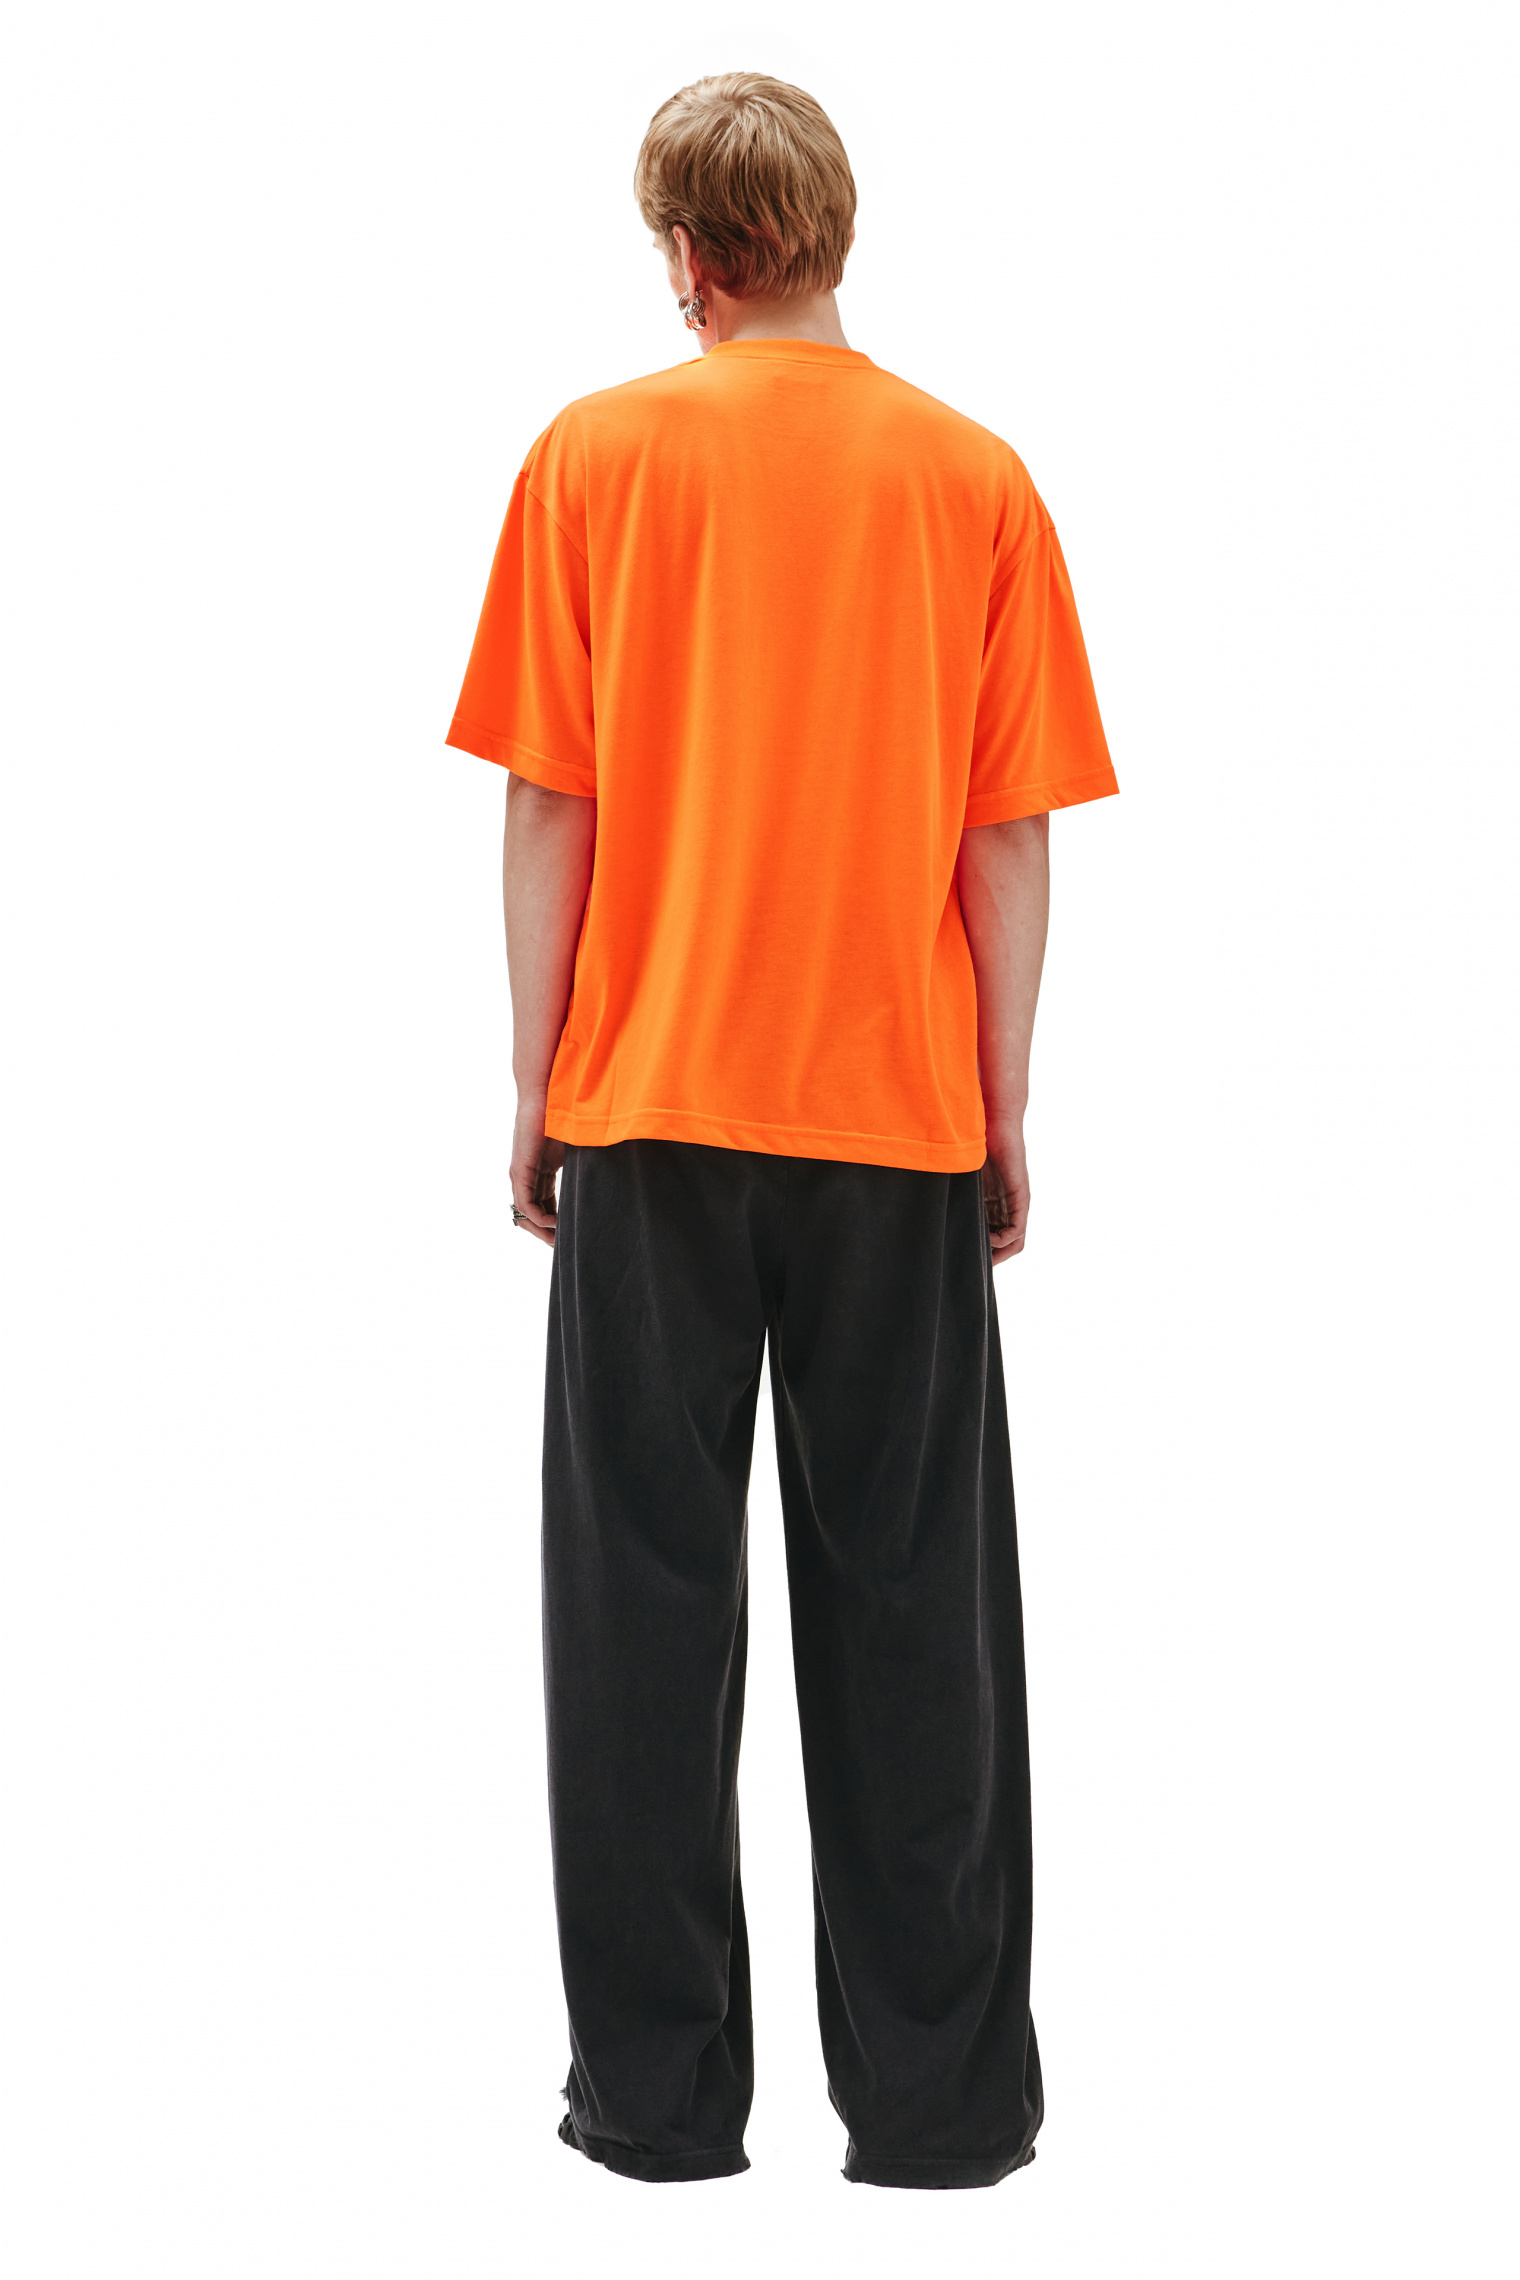 Balenciaga Orange T-shirt with embroidered logo